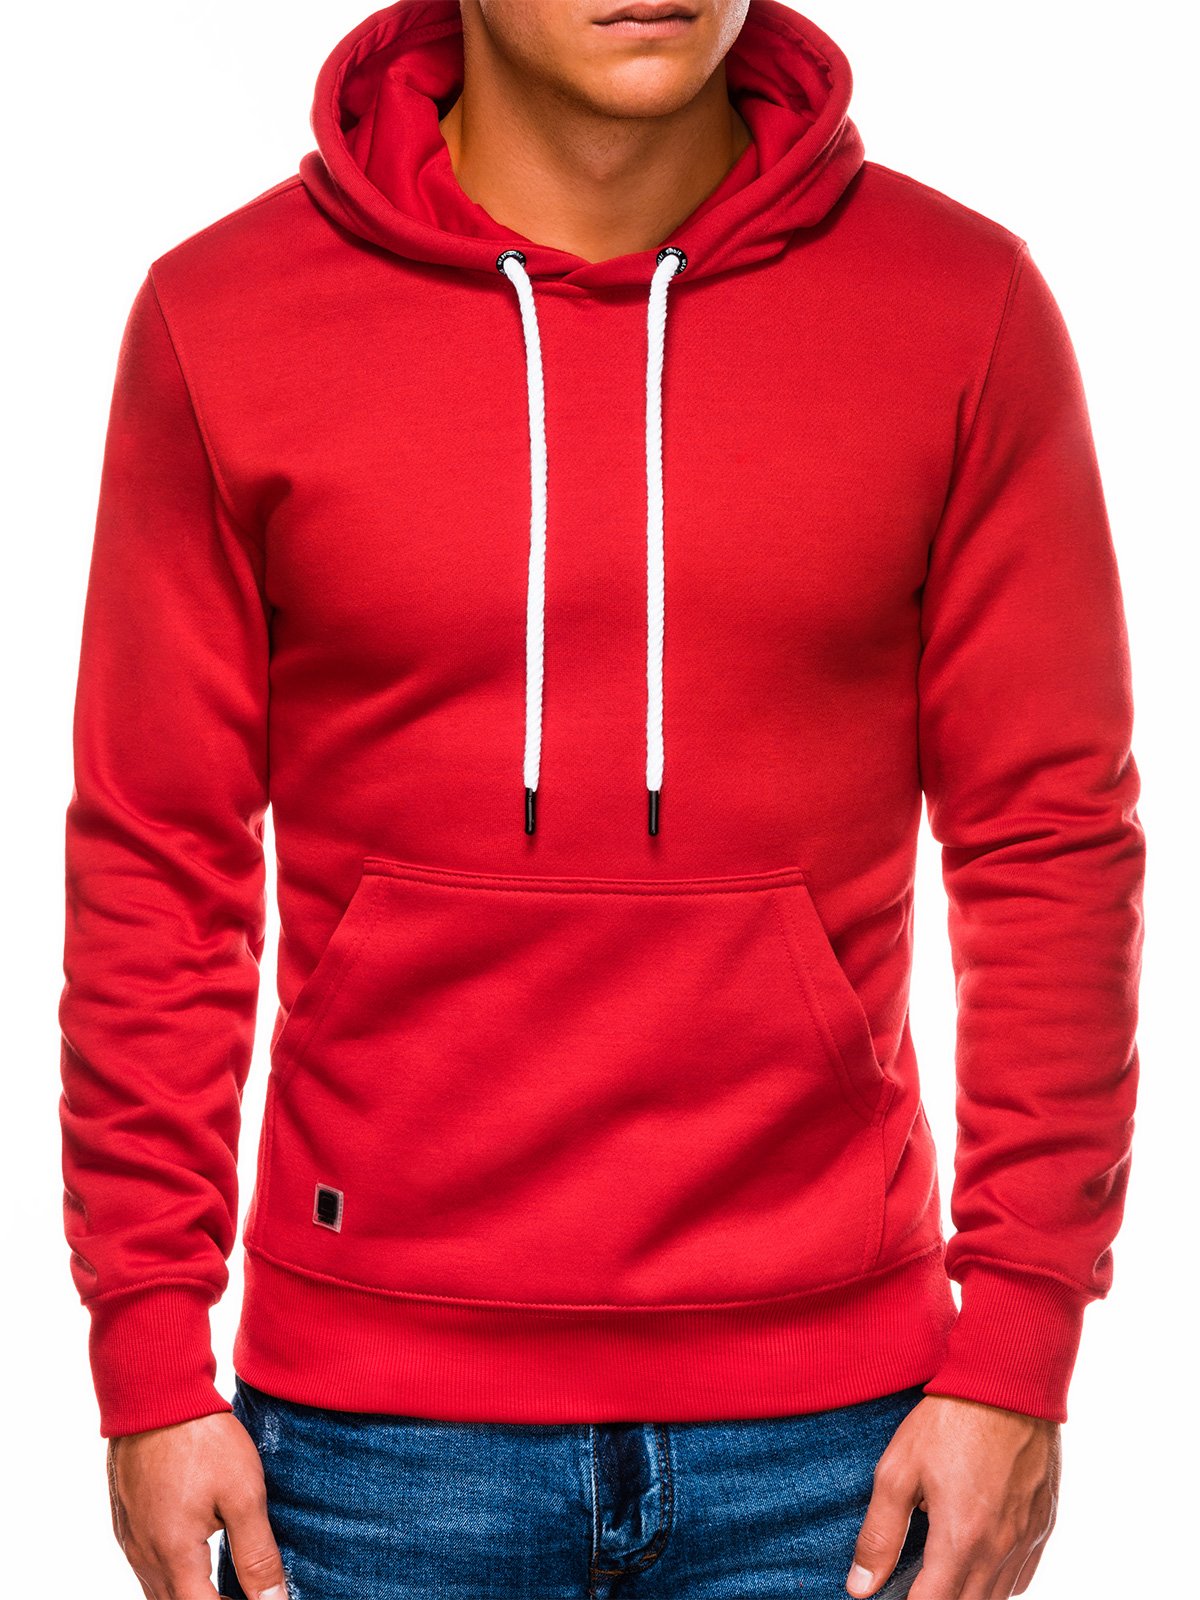 Men's hooded sweatshirt B979 - red | MODONE wholesale - Clothing For Men